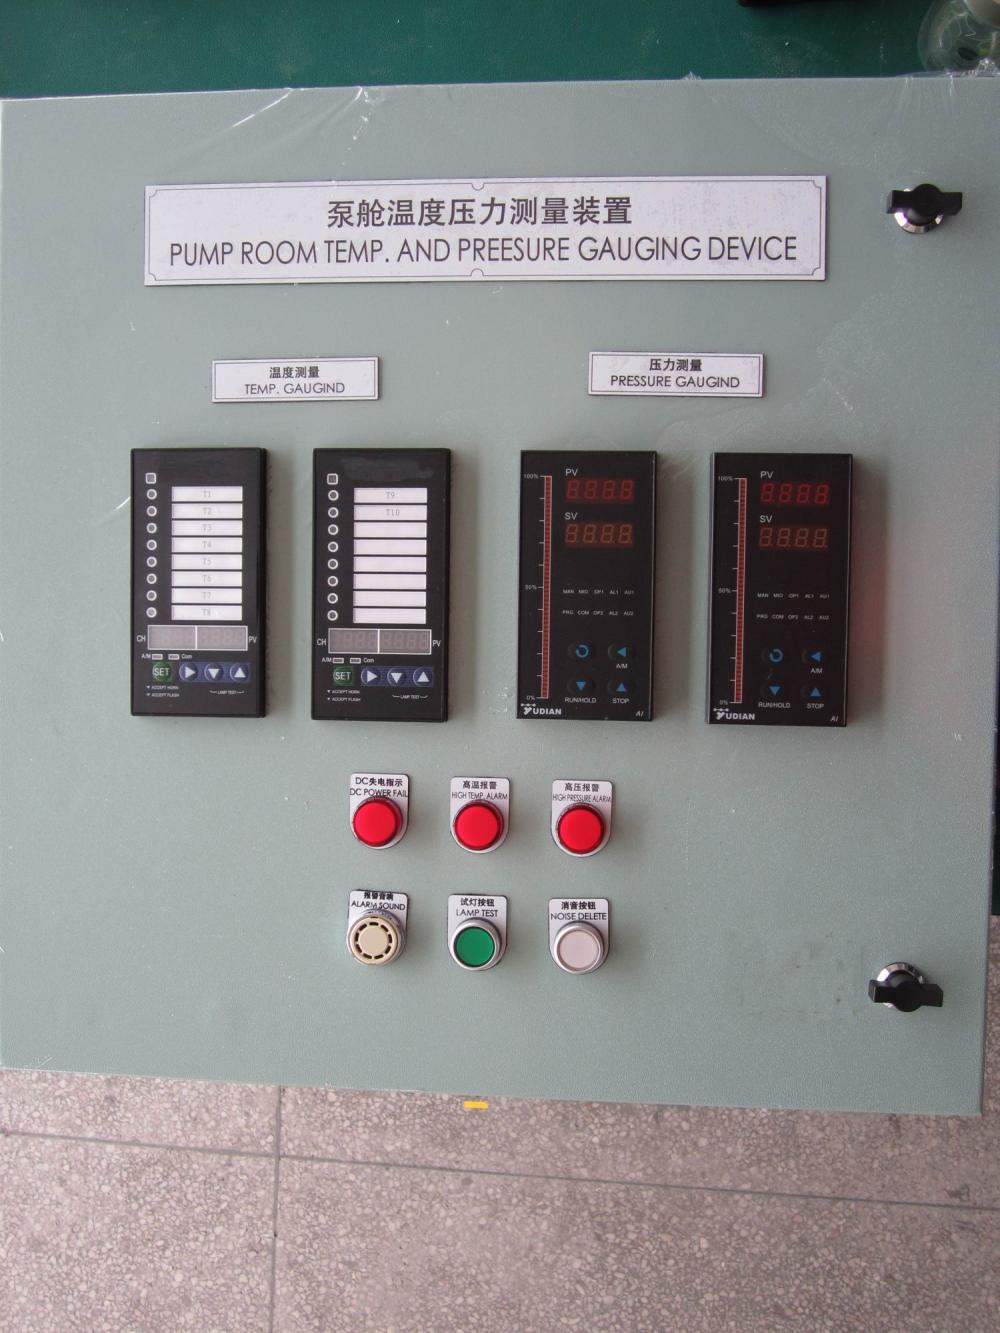 Marine Pump Room Temp. Monitoring and Alarm Device